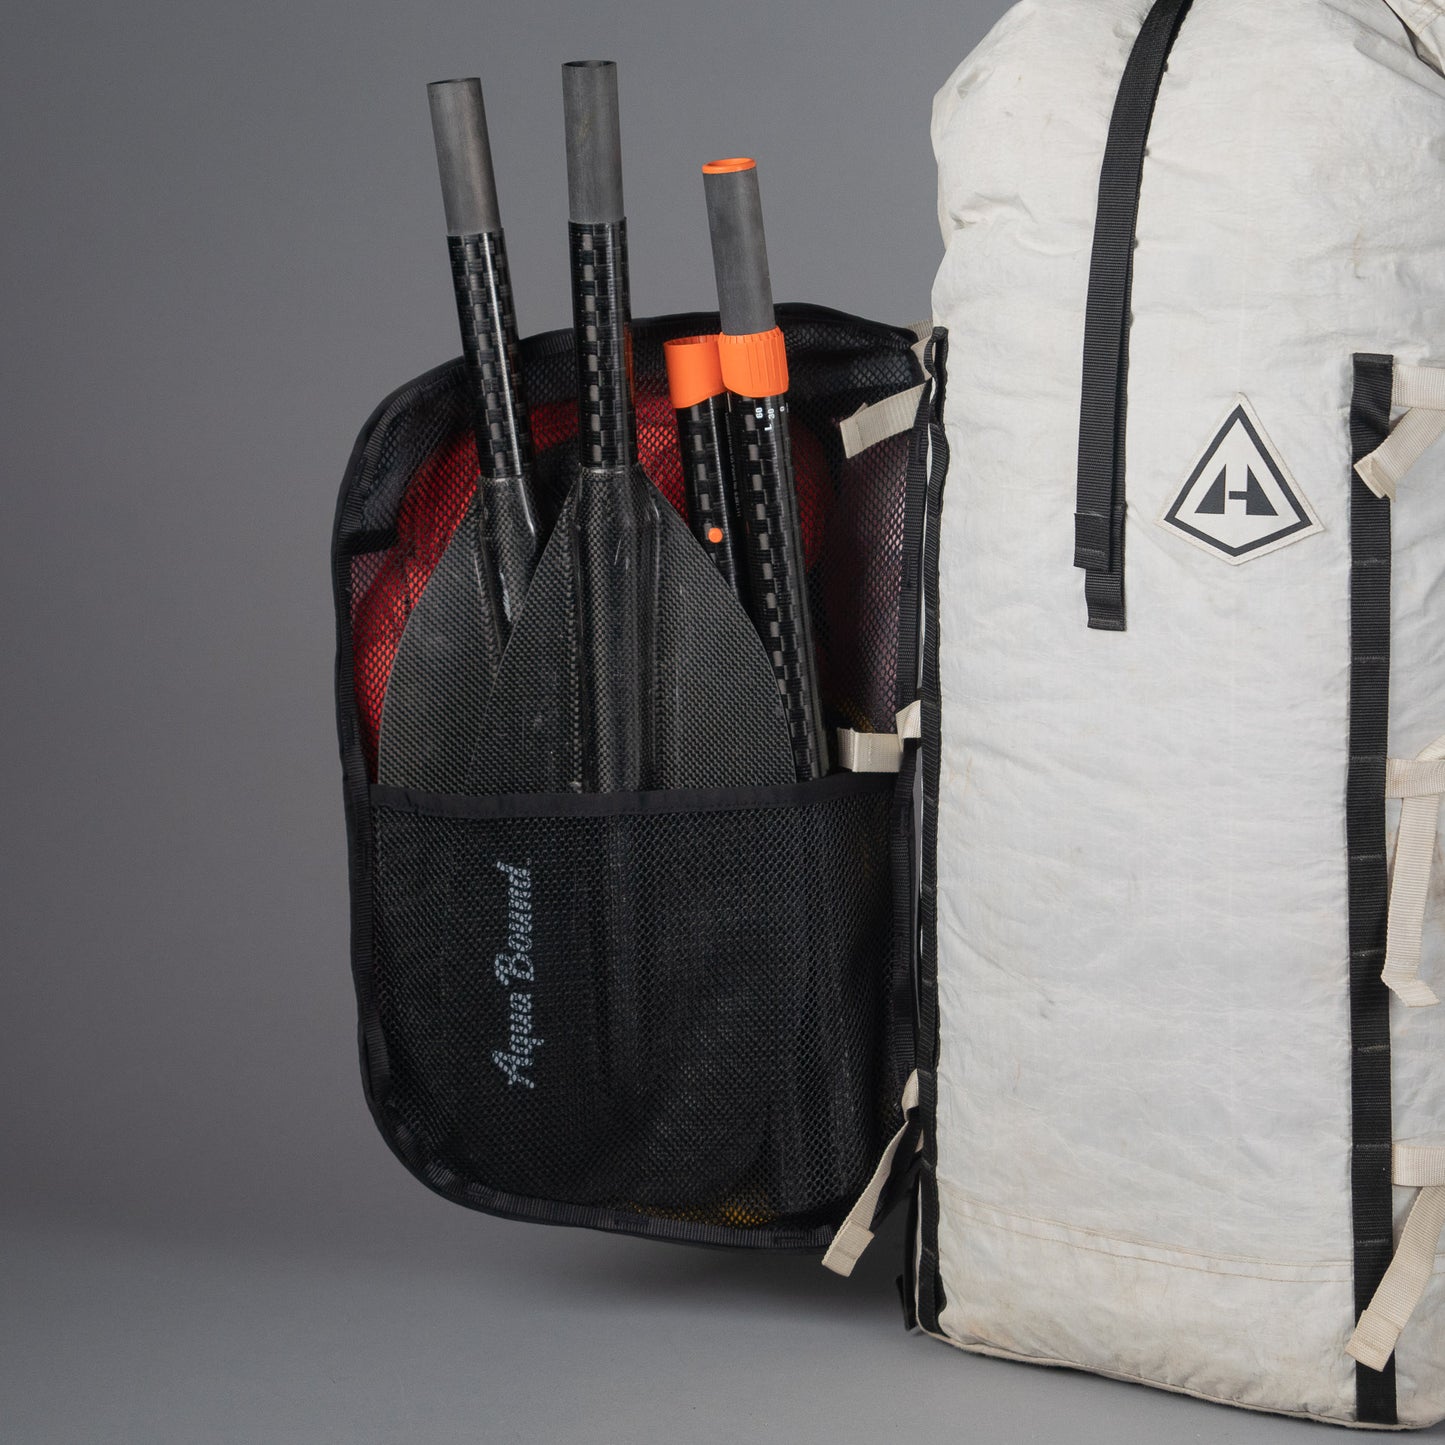 Packraft Bow Bag - Stock